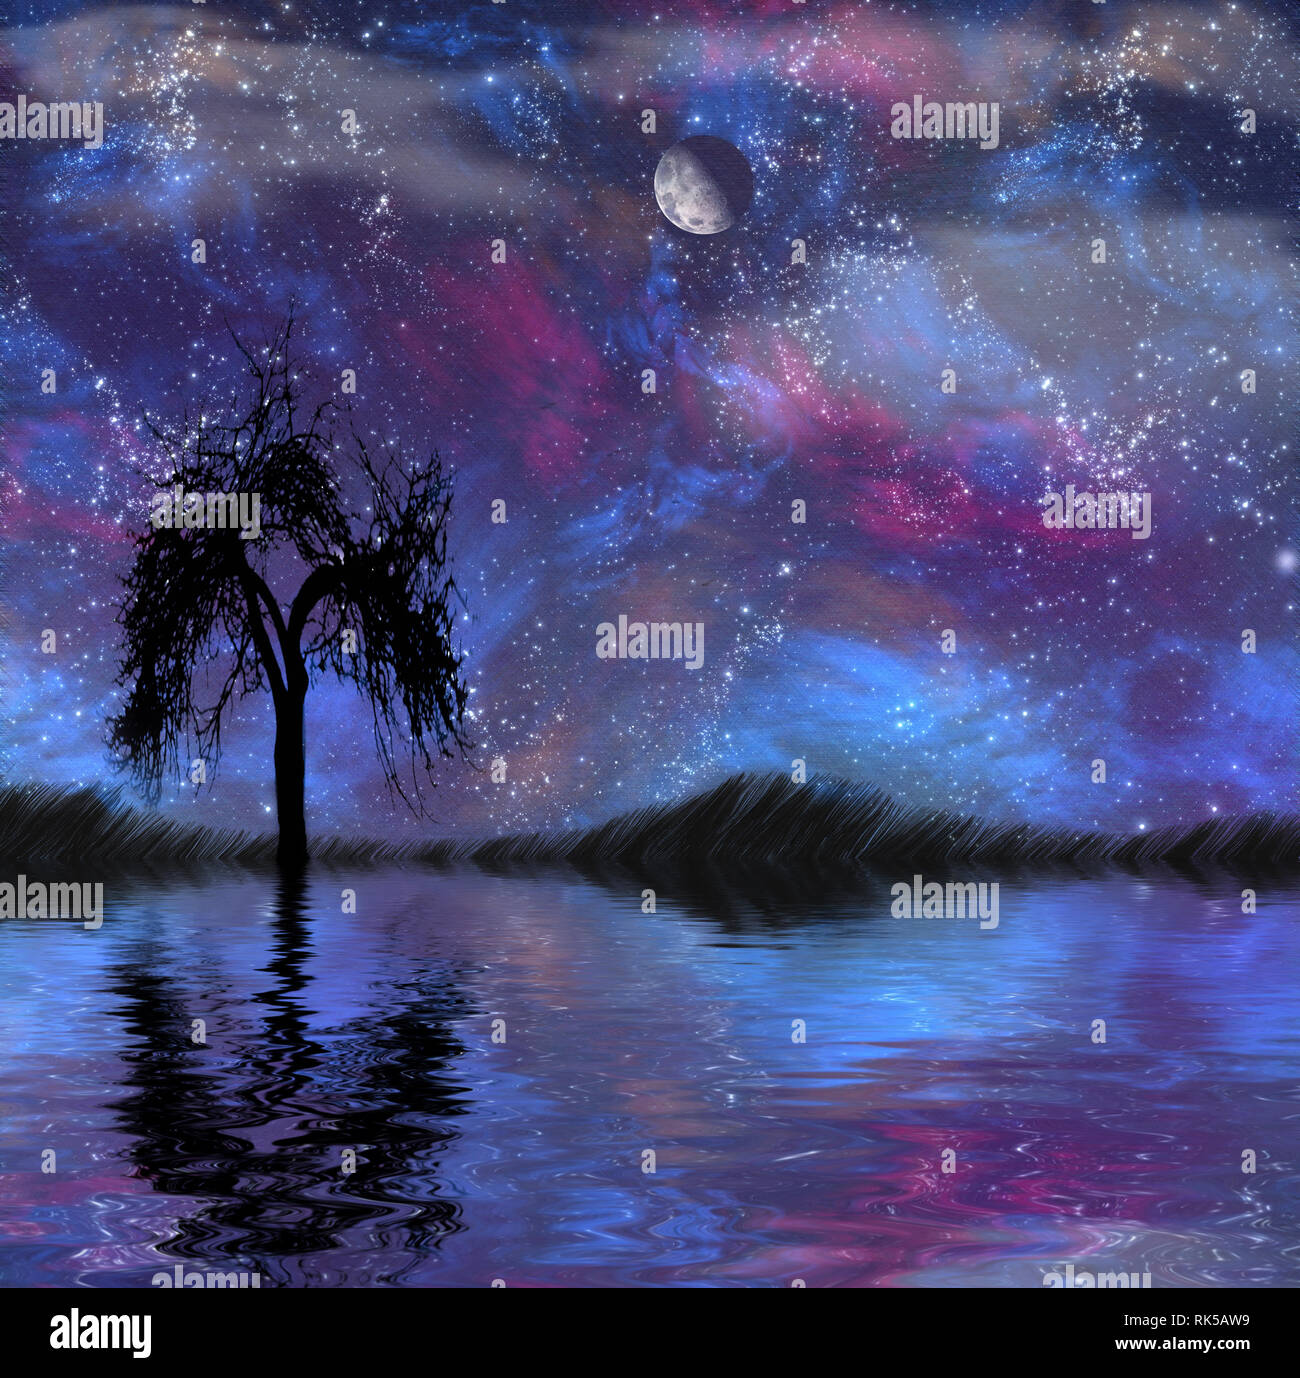 Cosmic Cloud Tree Vivid Nebula Background Rendering Stock Illustration by  ©rolffimages #499320432